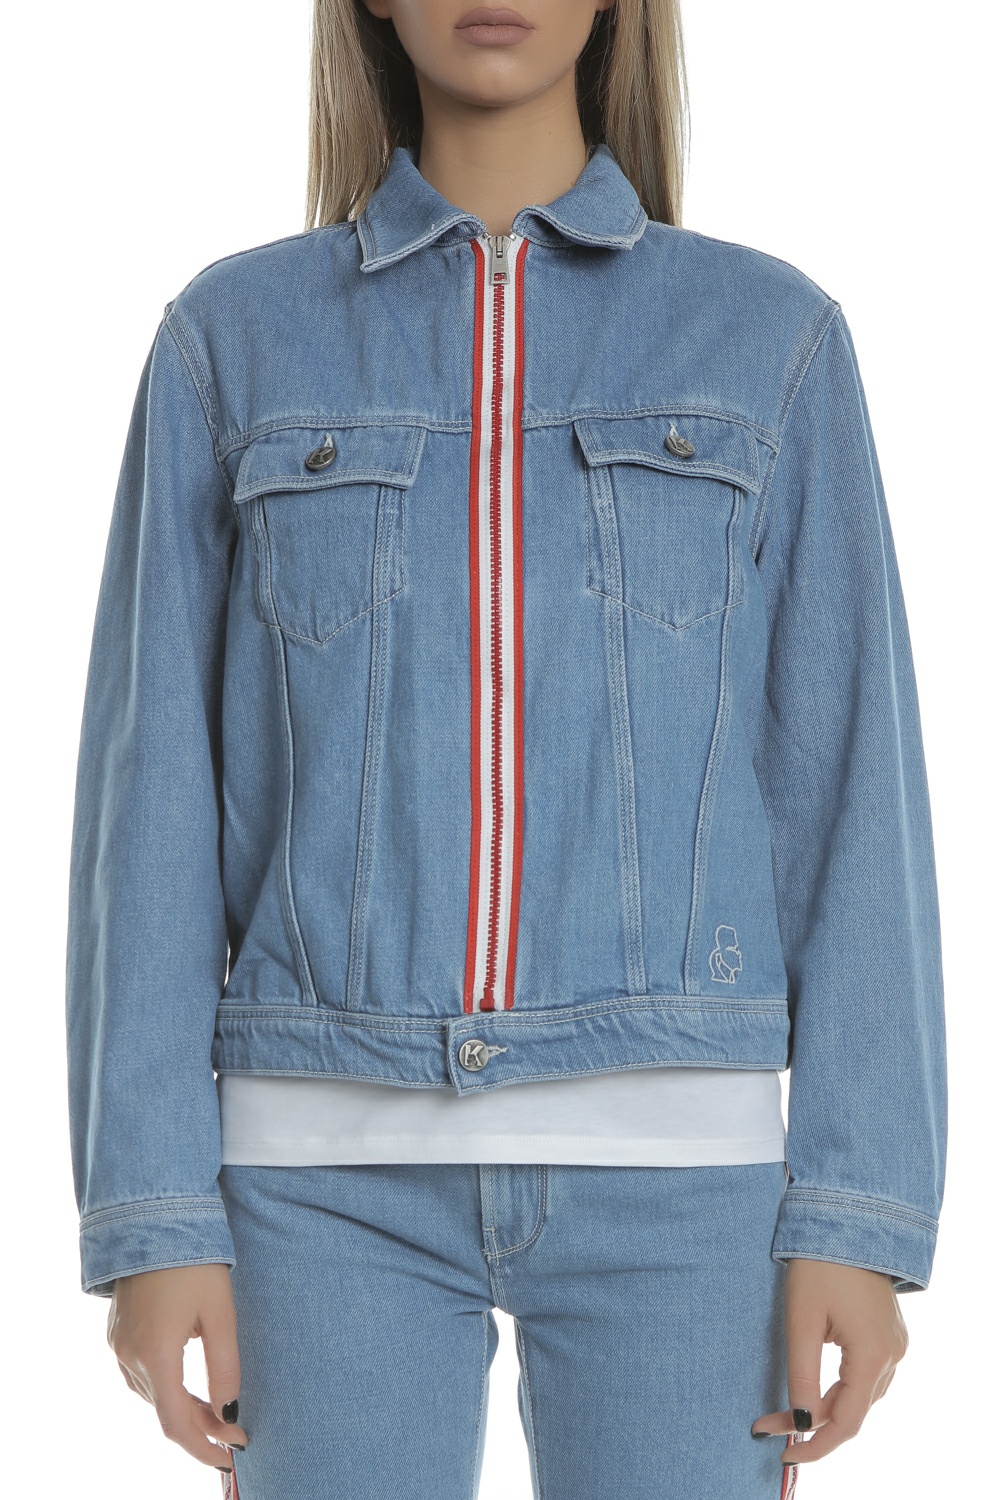 KARL LAGERFELD - Γυναικείο τζιν jacket KARL LAGERFELD μπλε Γυναικεία/Ρούχα/Πανωφόρια/Τζάκετς